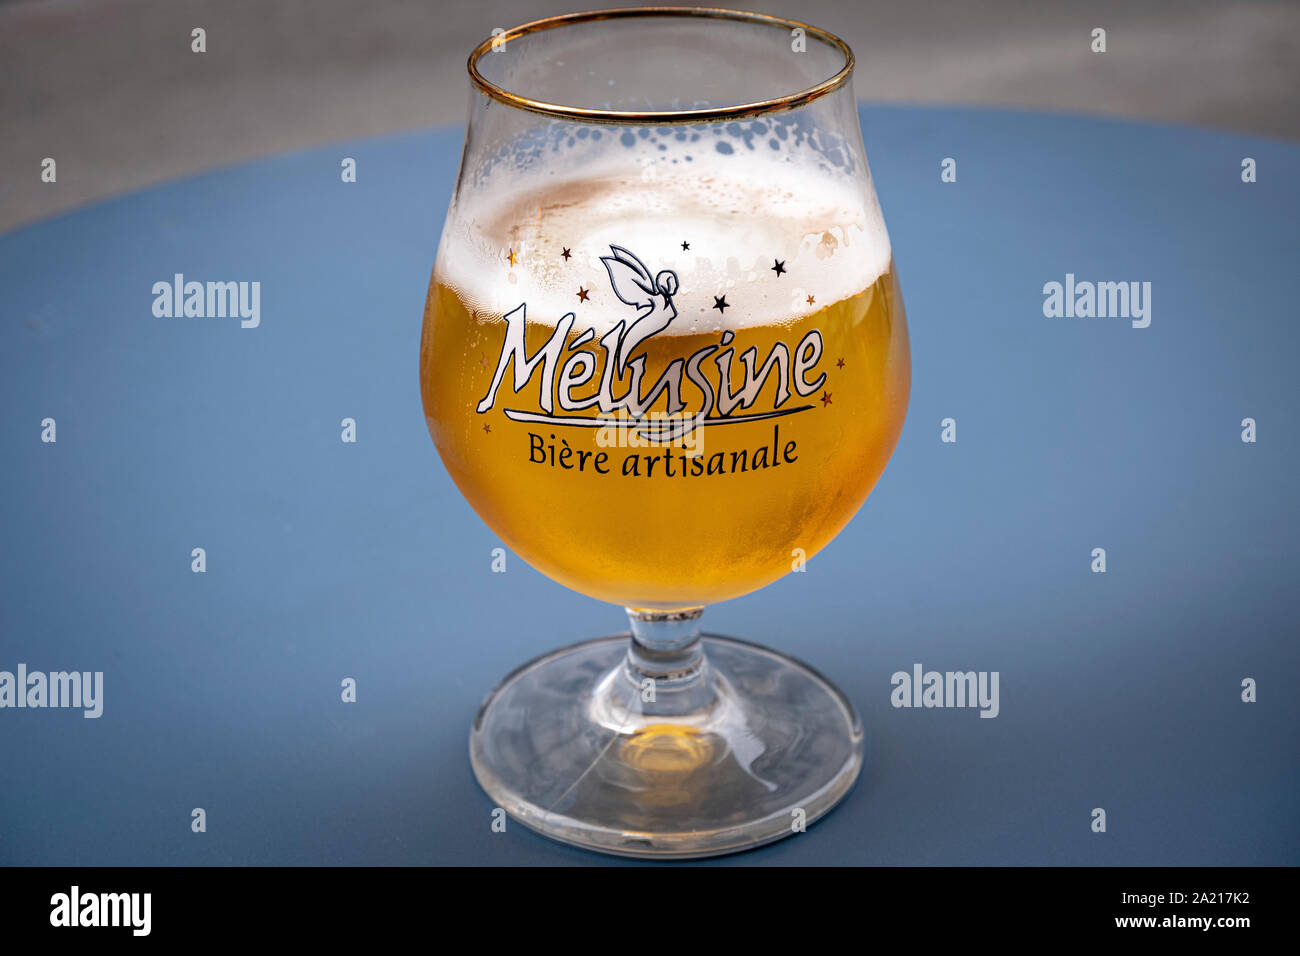 Half drunk beer, Melusine, biere artisinale, craft beer on blue table Stock  Photo - Alamy